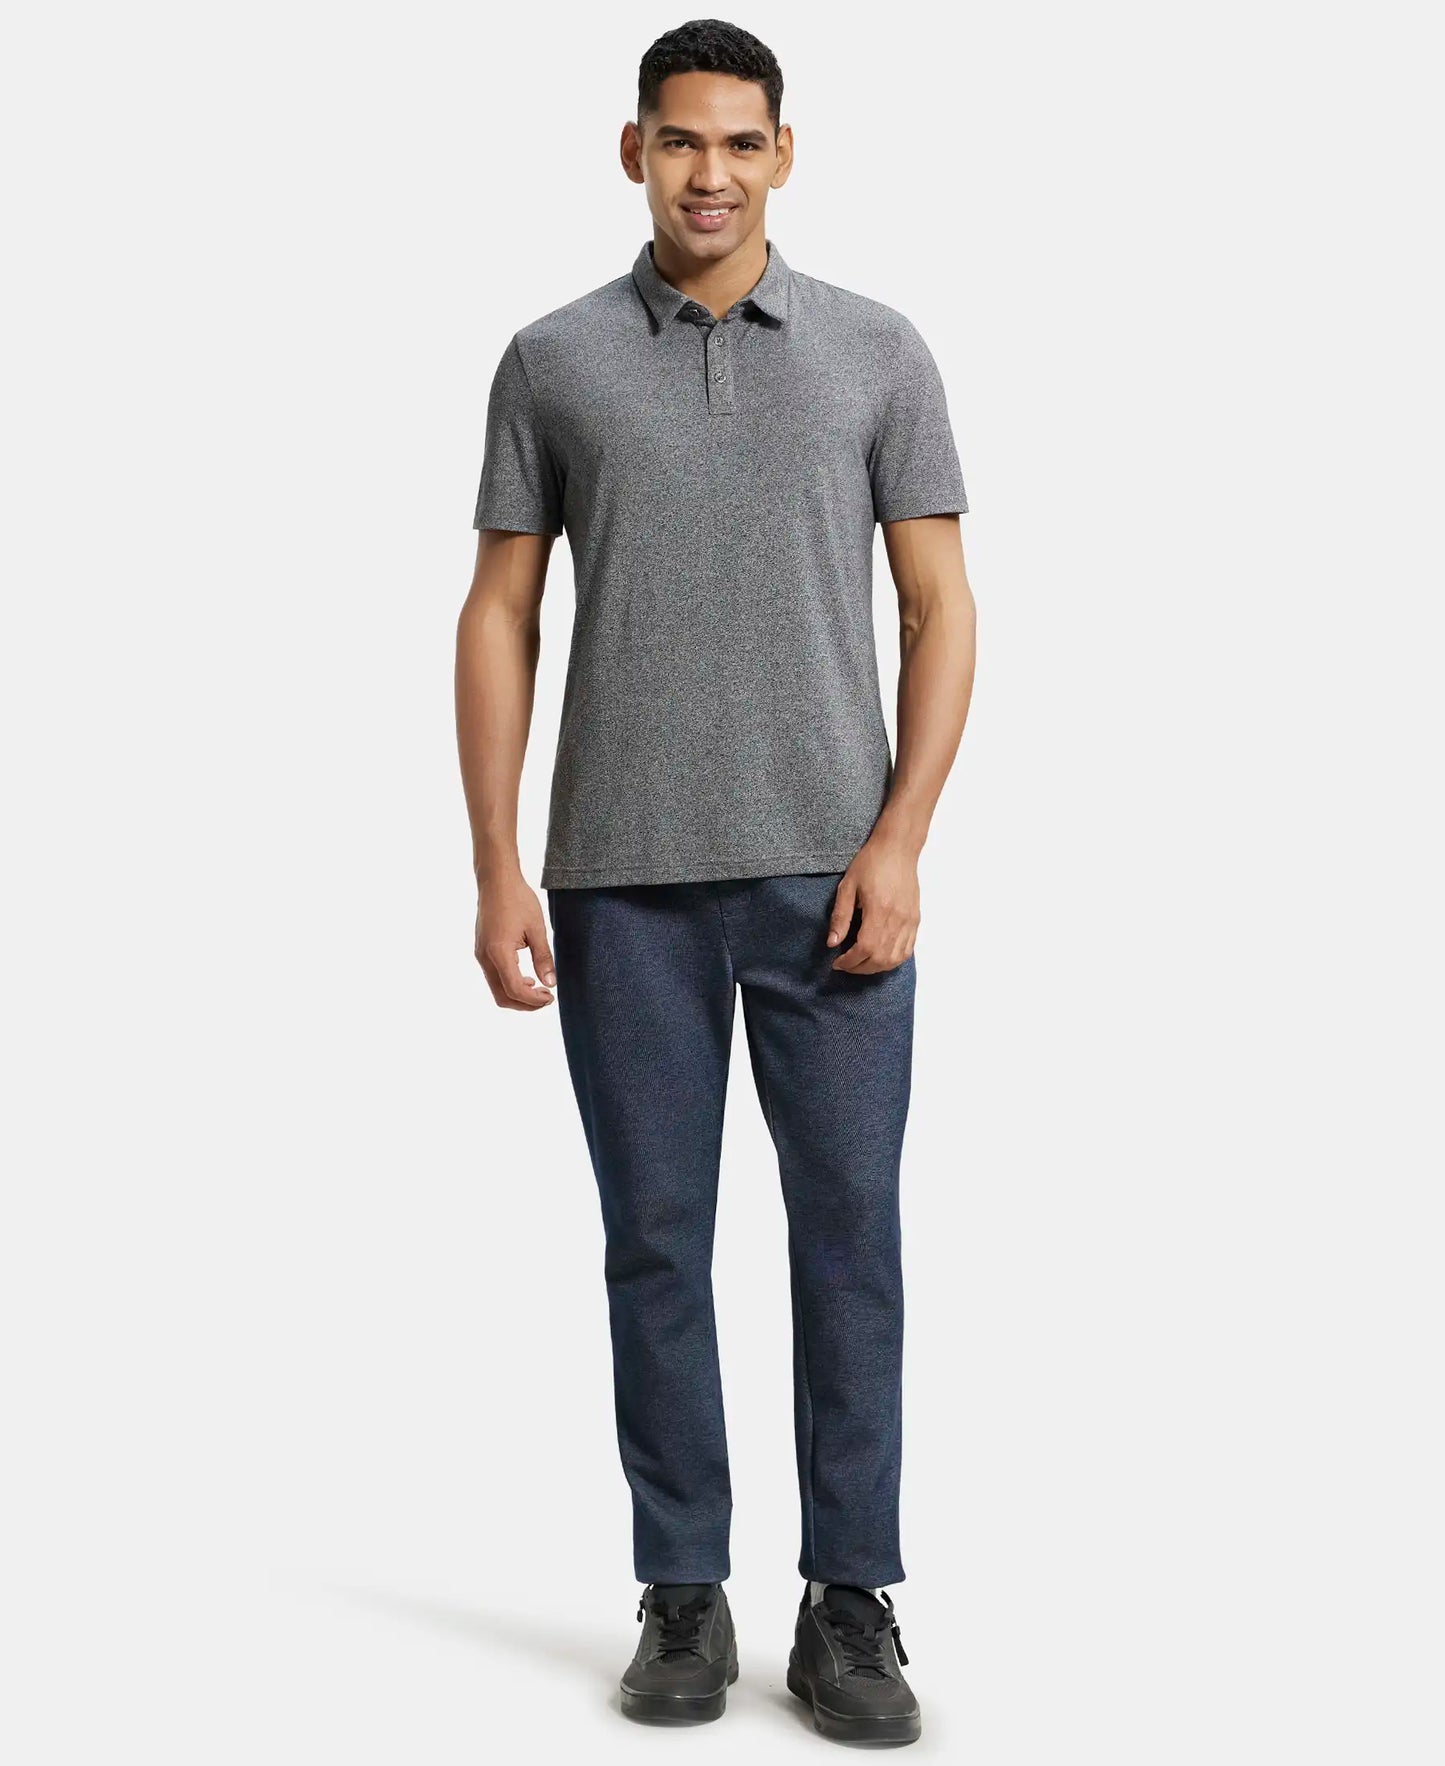 Tencel Micro Modal Supima Cotton Elastane Stretch Half Sleeve Polo T-Shirt - Black Jasper-4